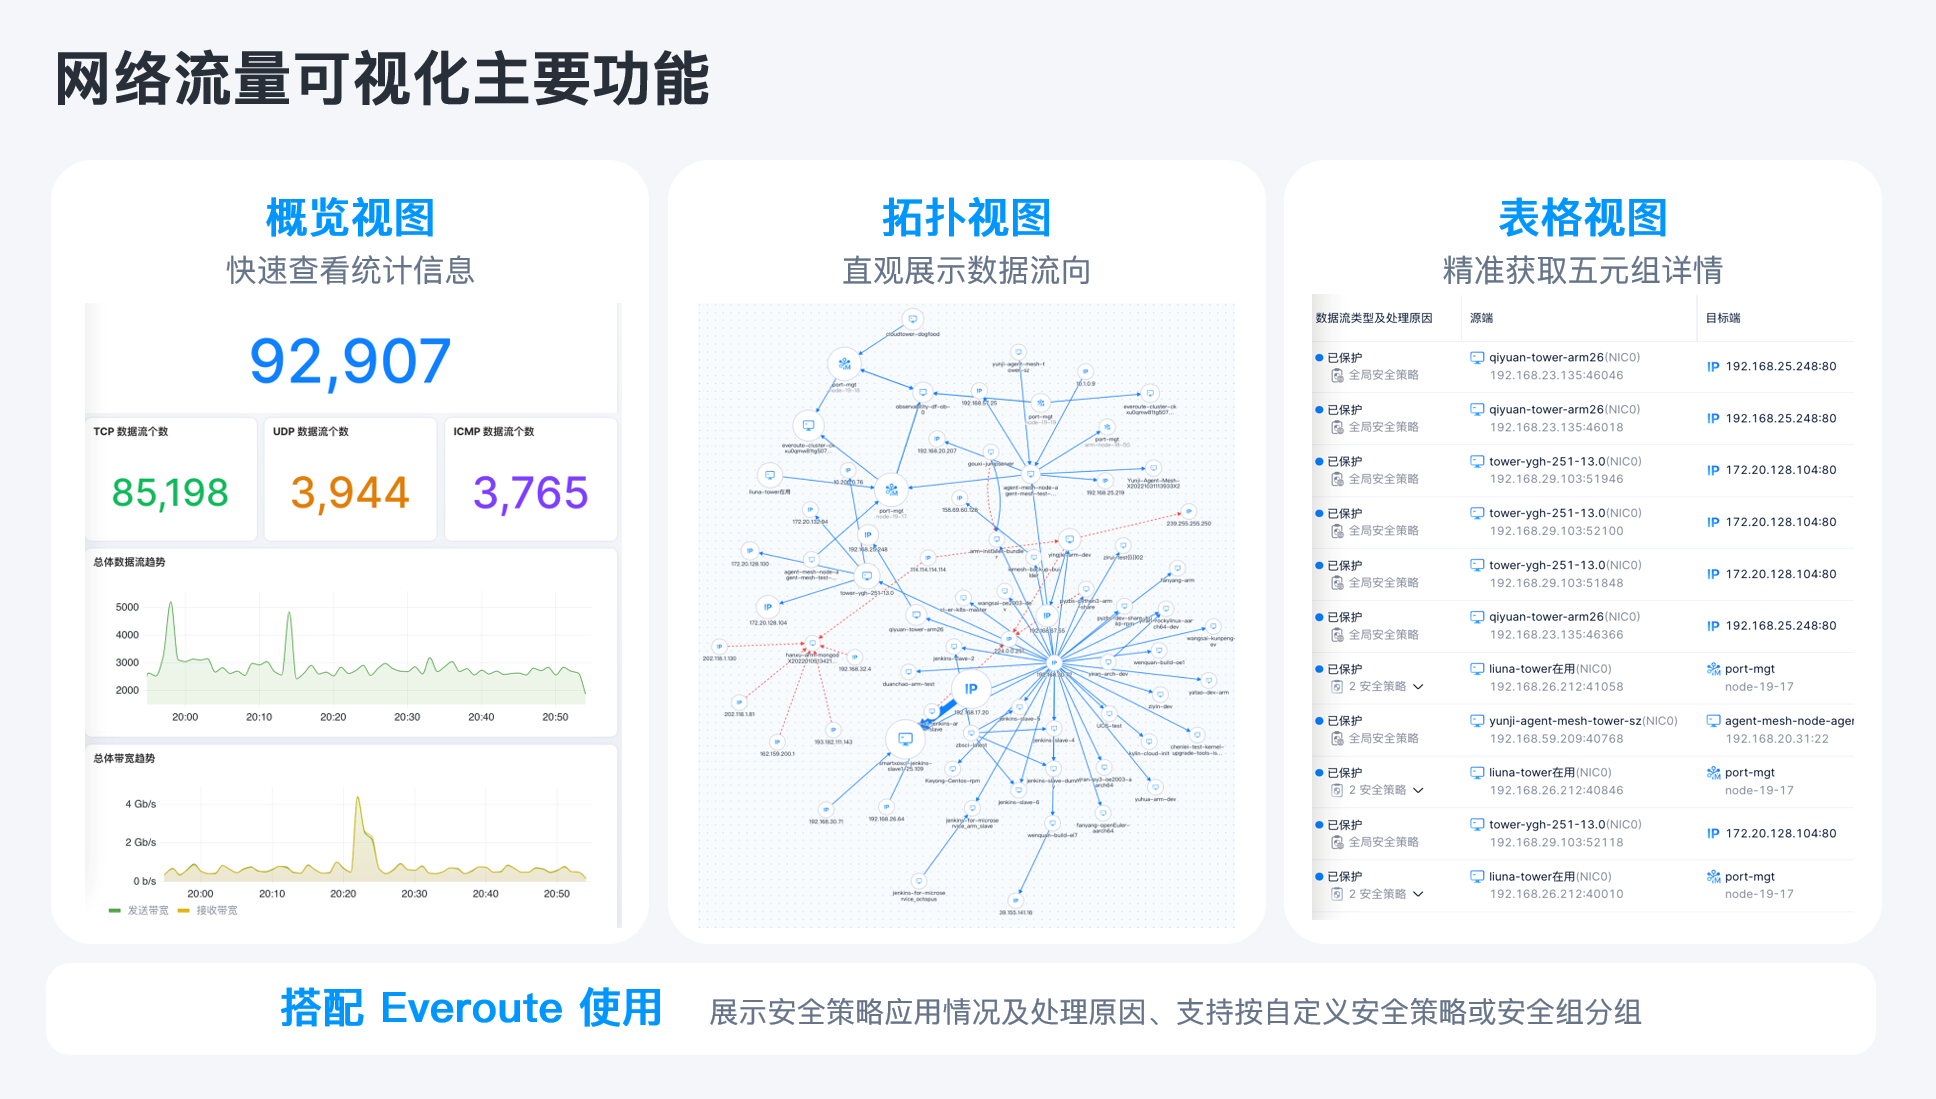 03_smartx-network-traffic-visualization.png